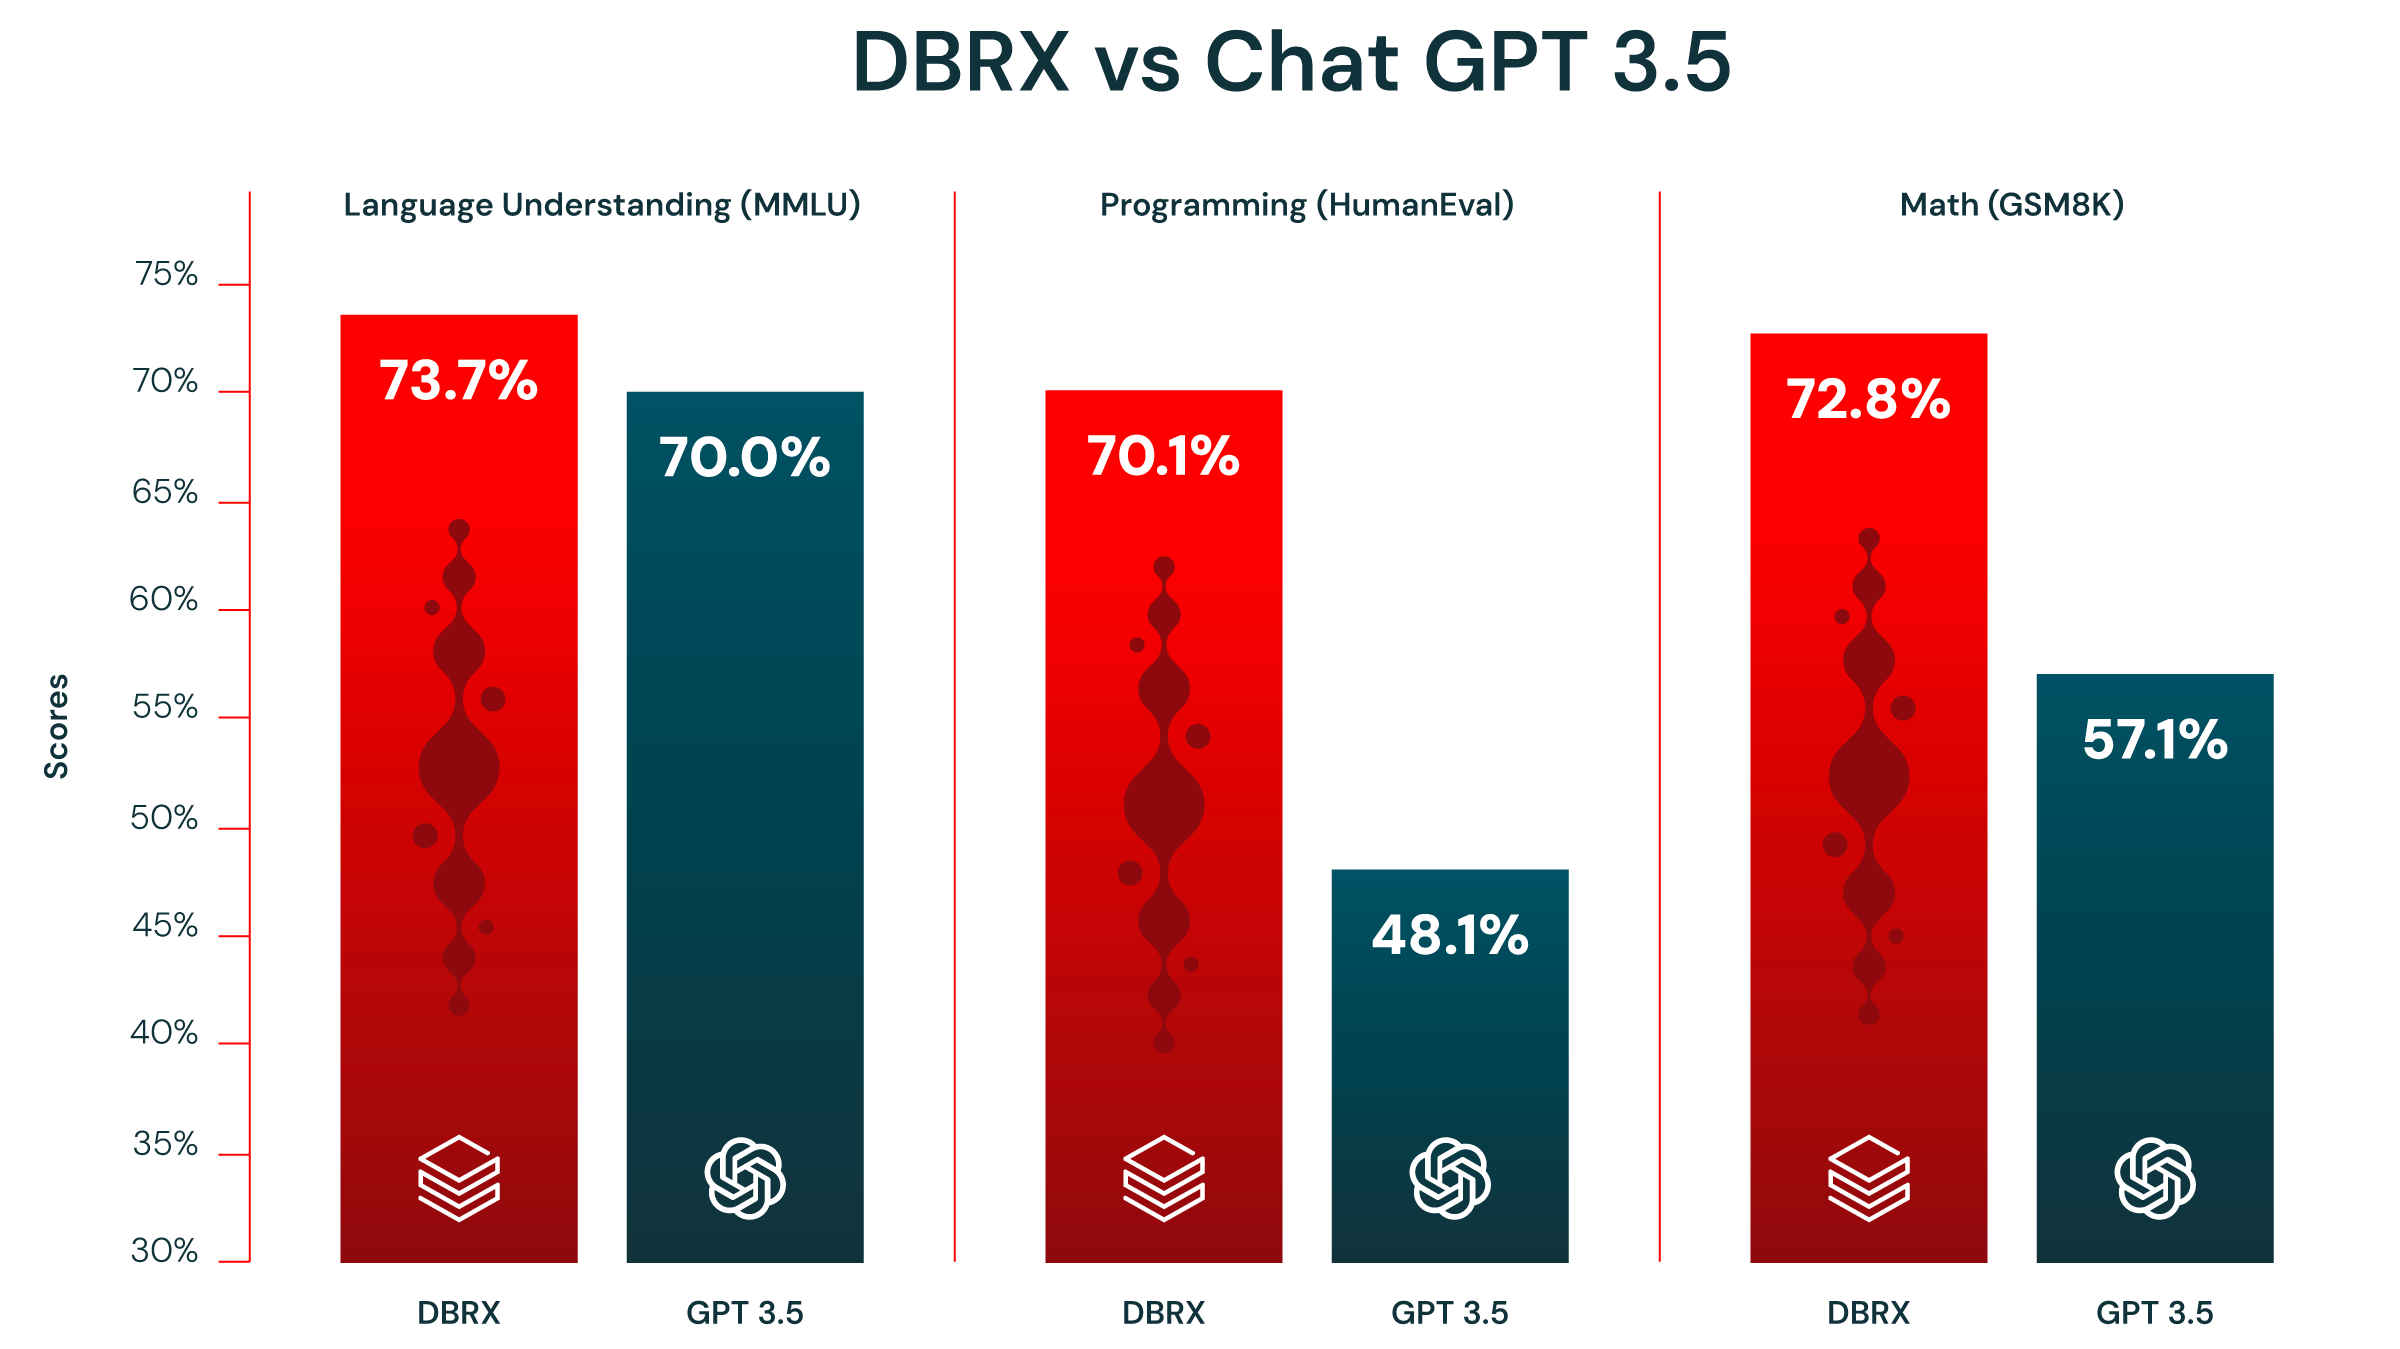 DBRX outperforms GPT 3.5 across language understanding 